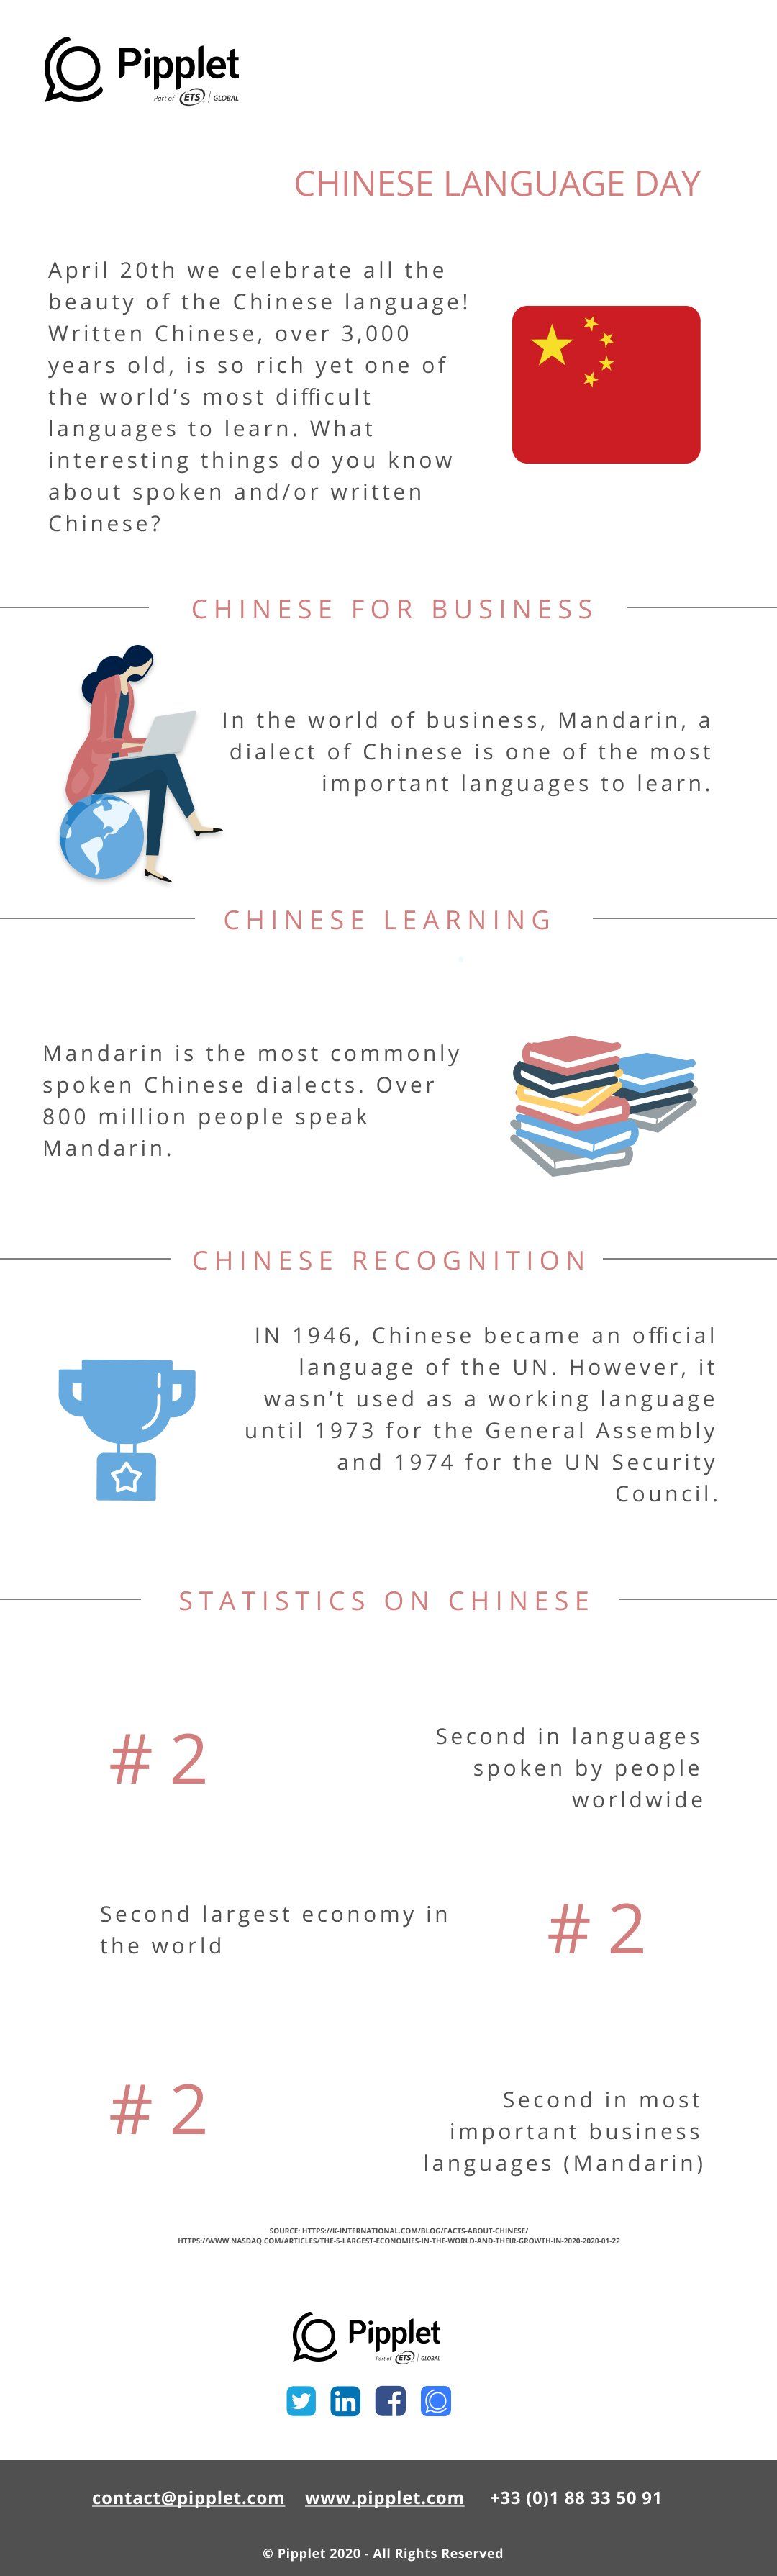 Chinese language day infographic